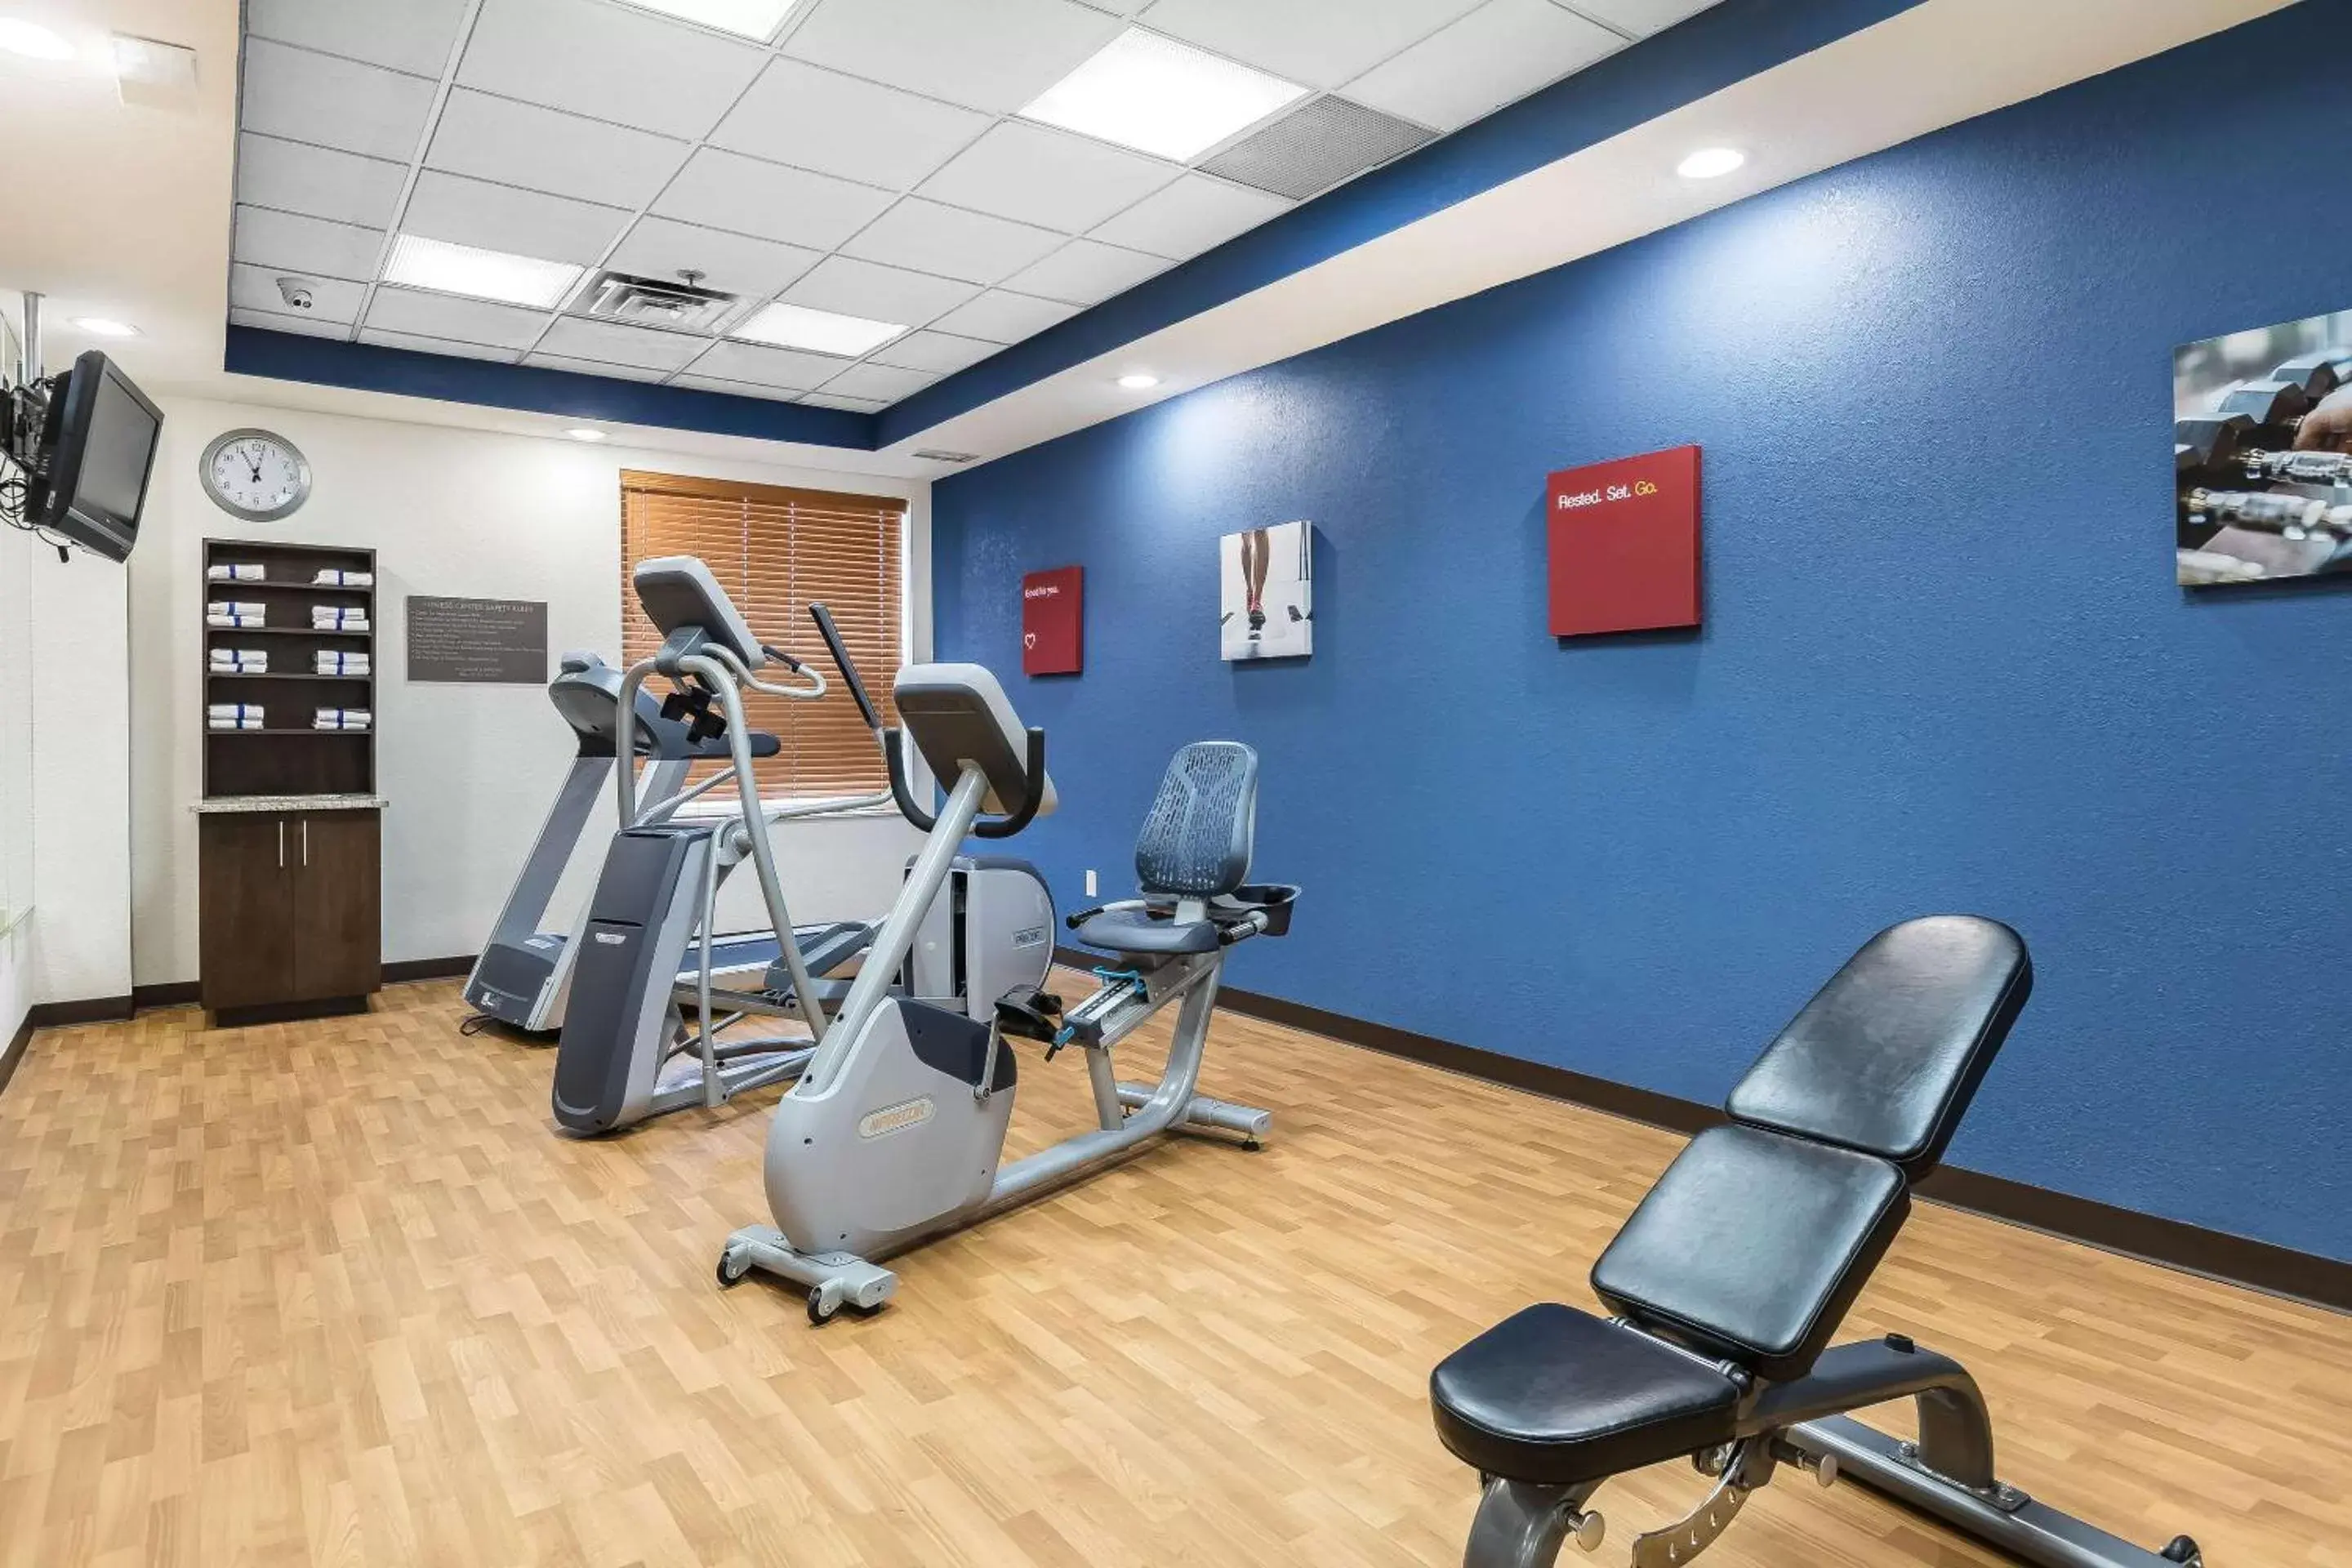 Fitness centre/facilities, Fitness Center/Facilities in Comfort Inn & Suites Allen Park/Dearborn